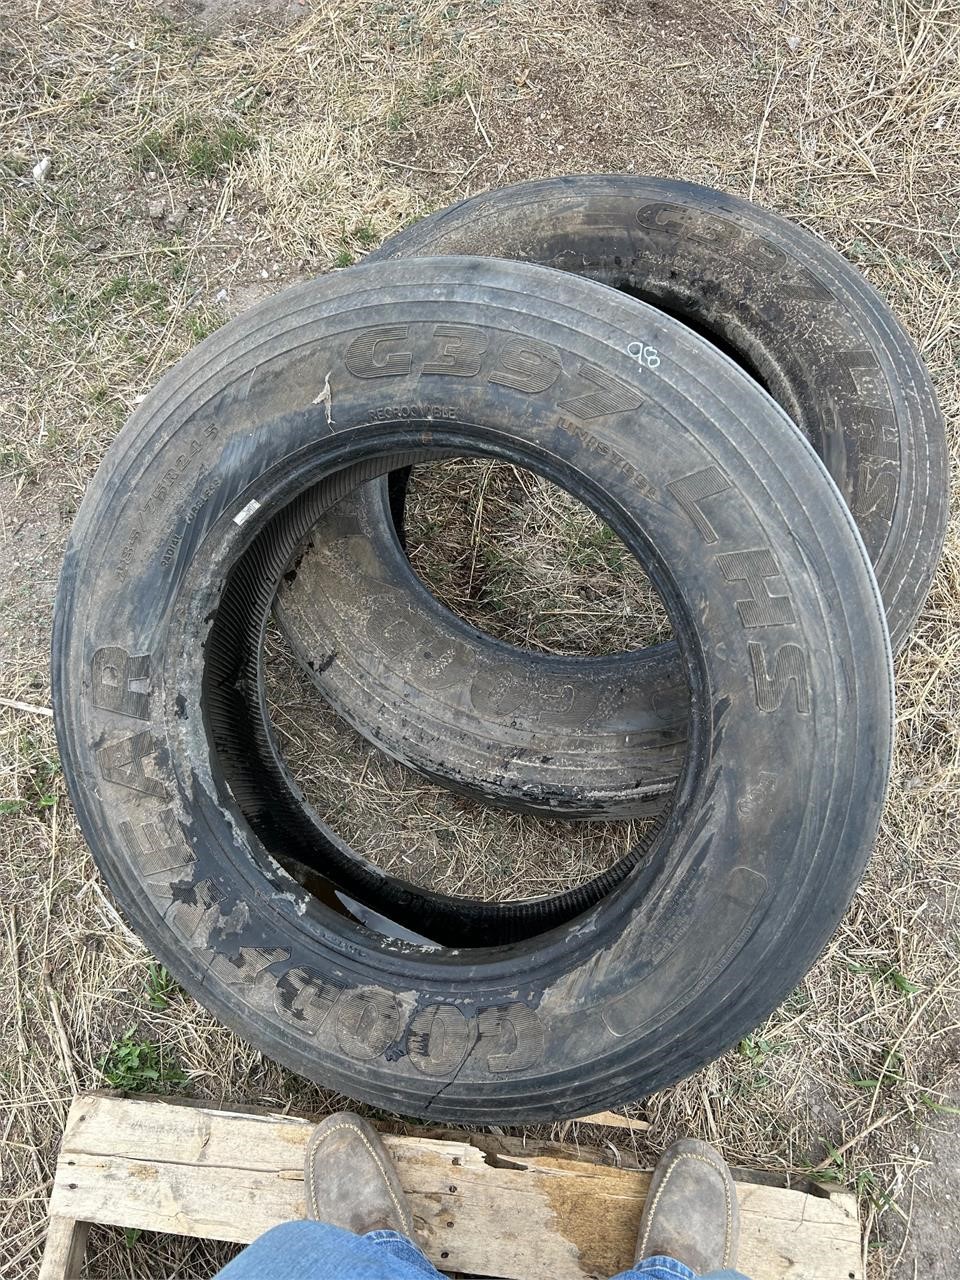 2 Goodyear Tires